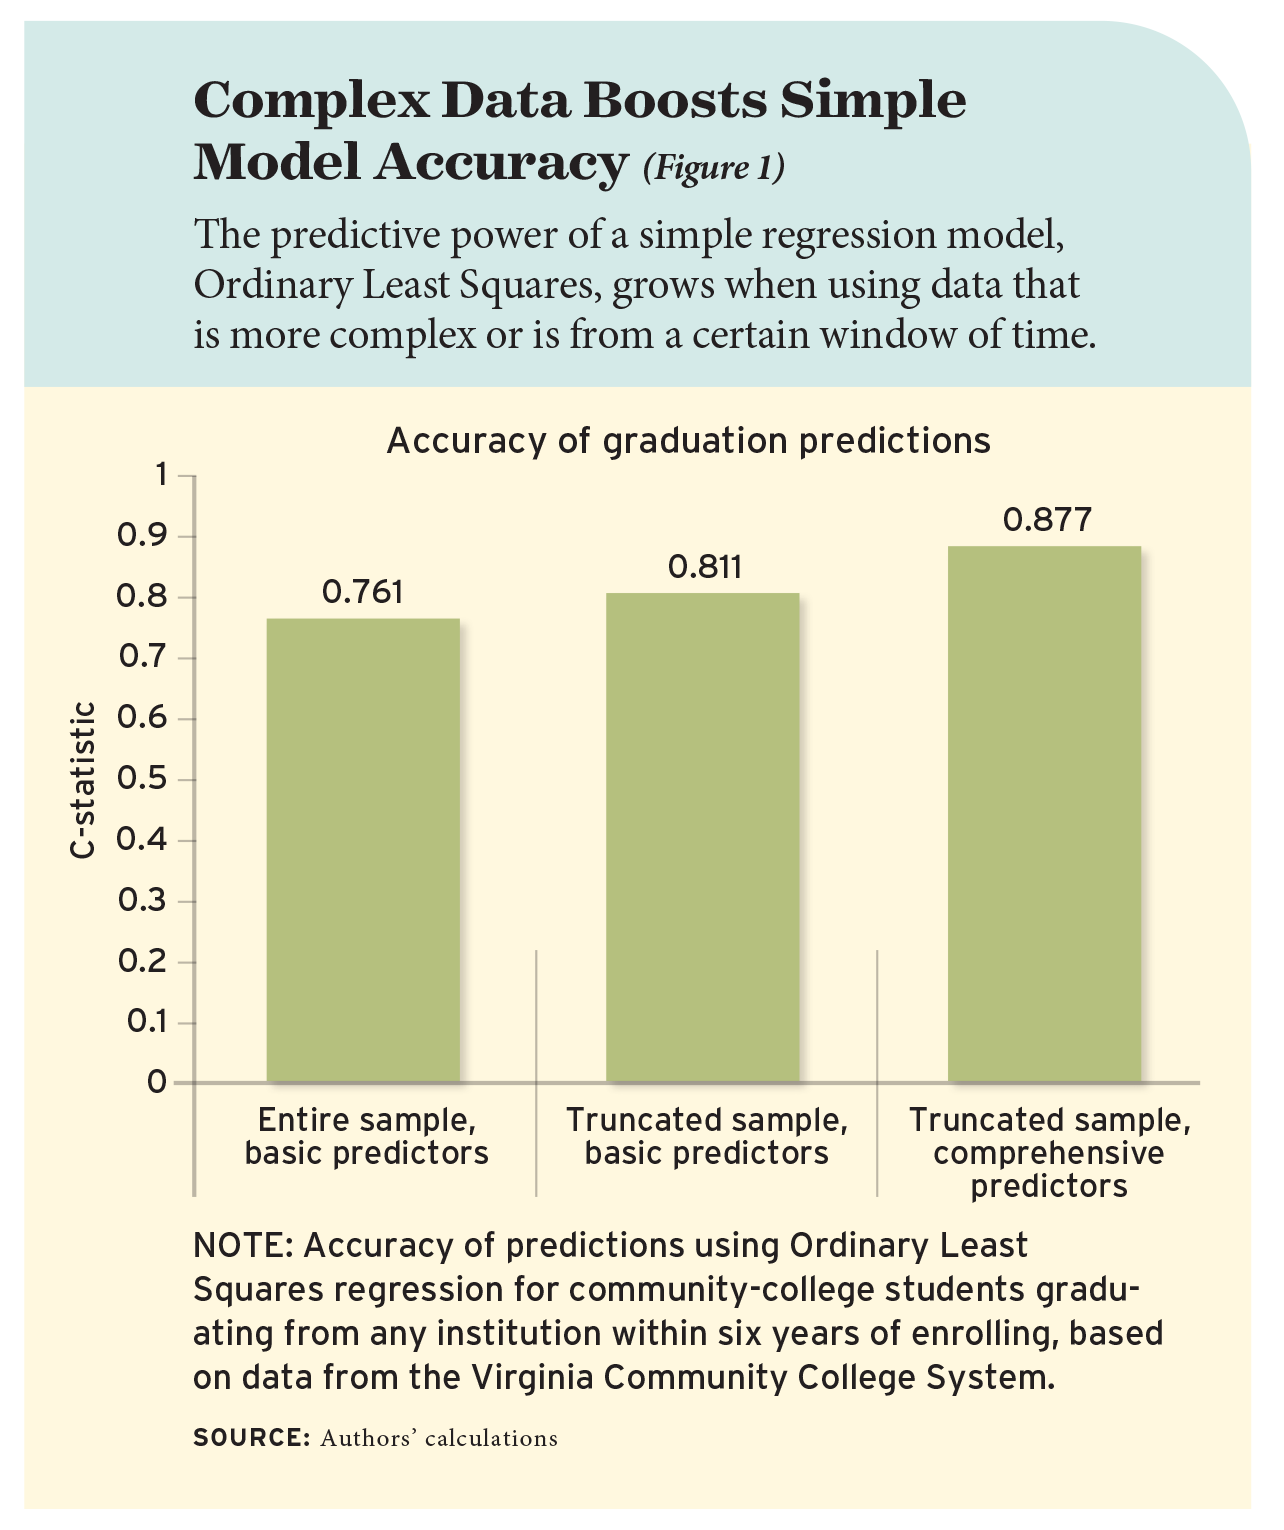 Figure 1: Complex Data Boosts Simple Model Accuracy